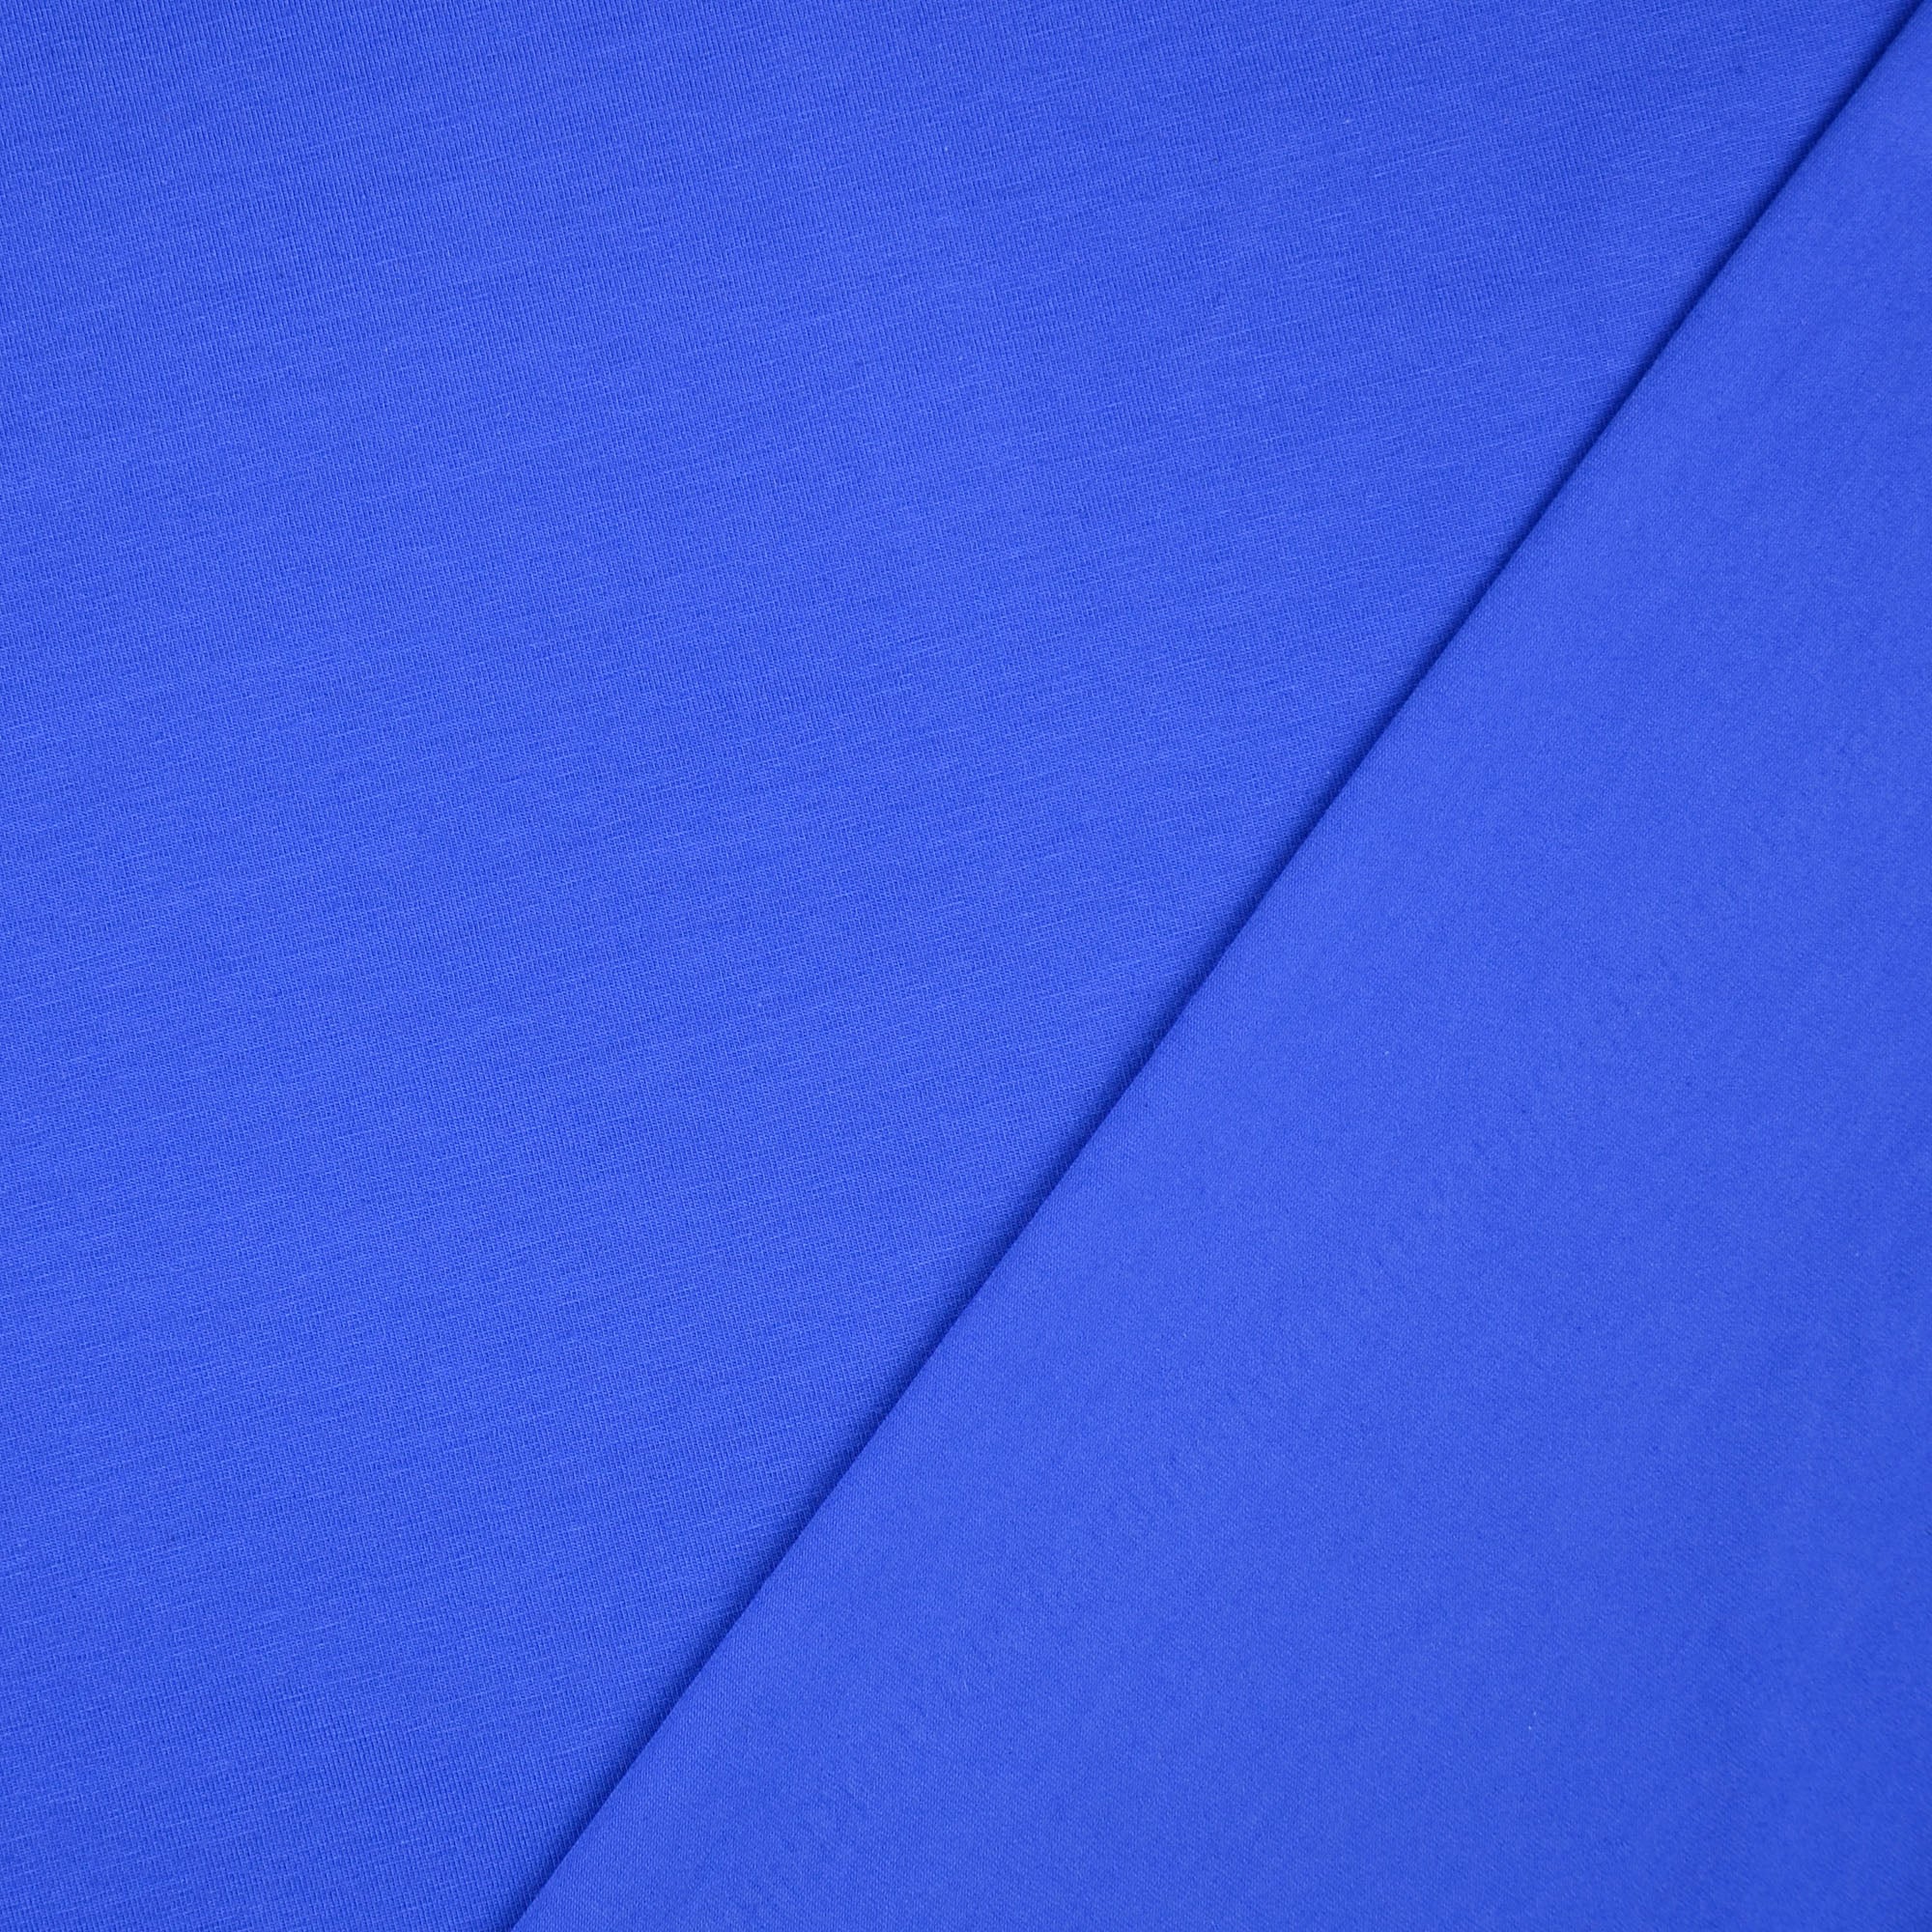 REMNANT 0.46 metre - Essential Chic Royal Blue Plain Cotton Jersey Fabric